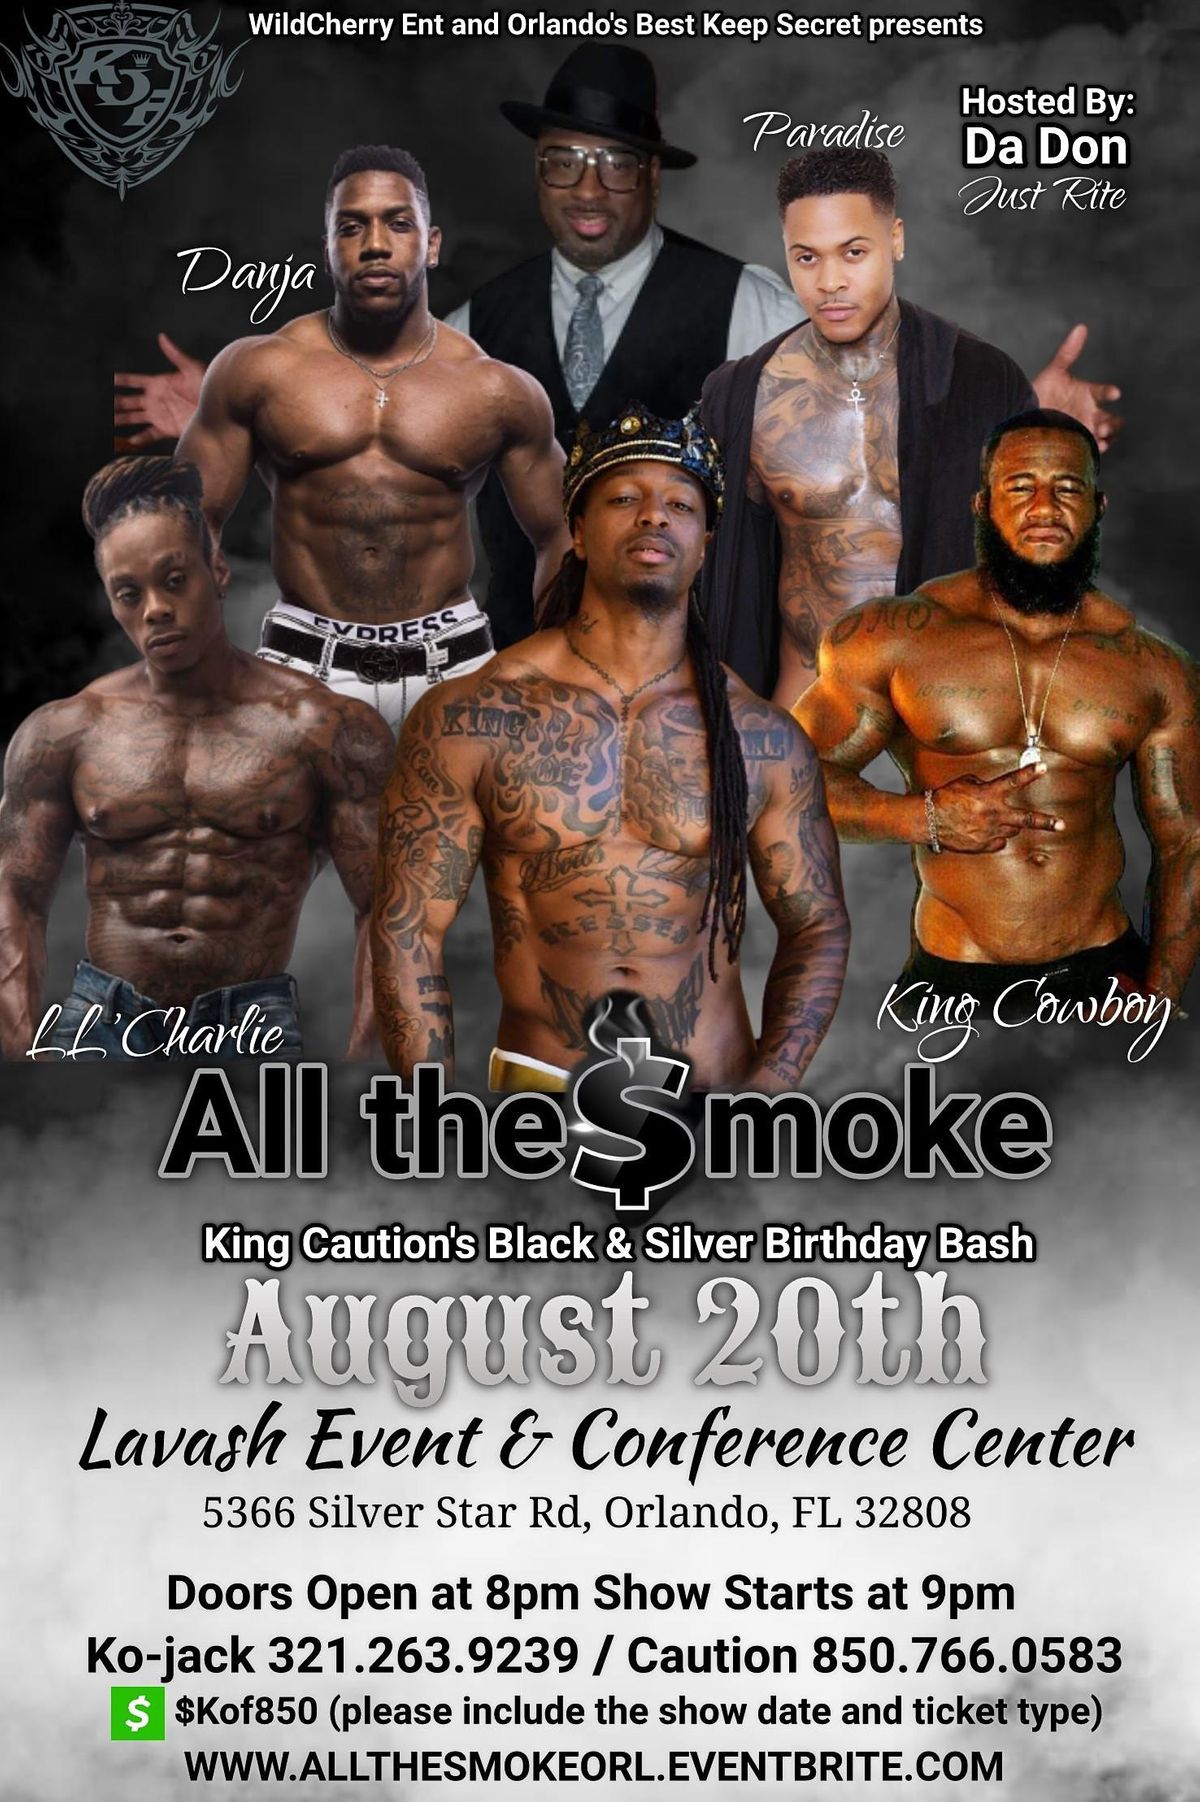 All the smoke: King Caution Black & Silver Birthda